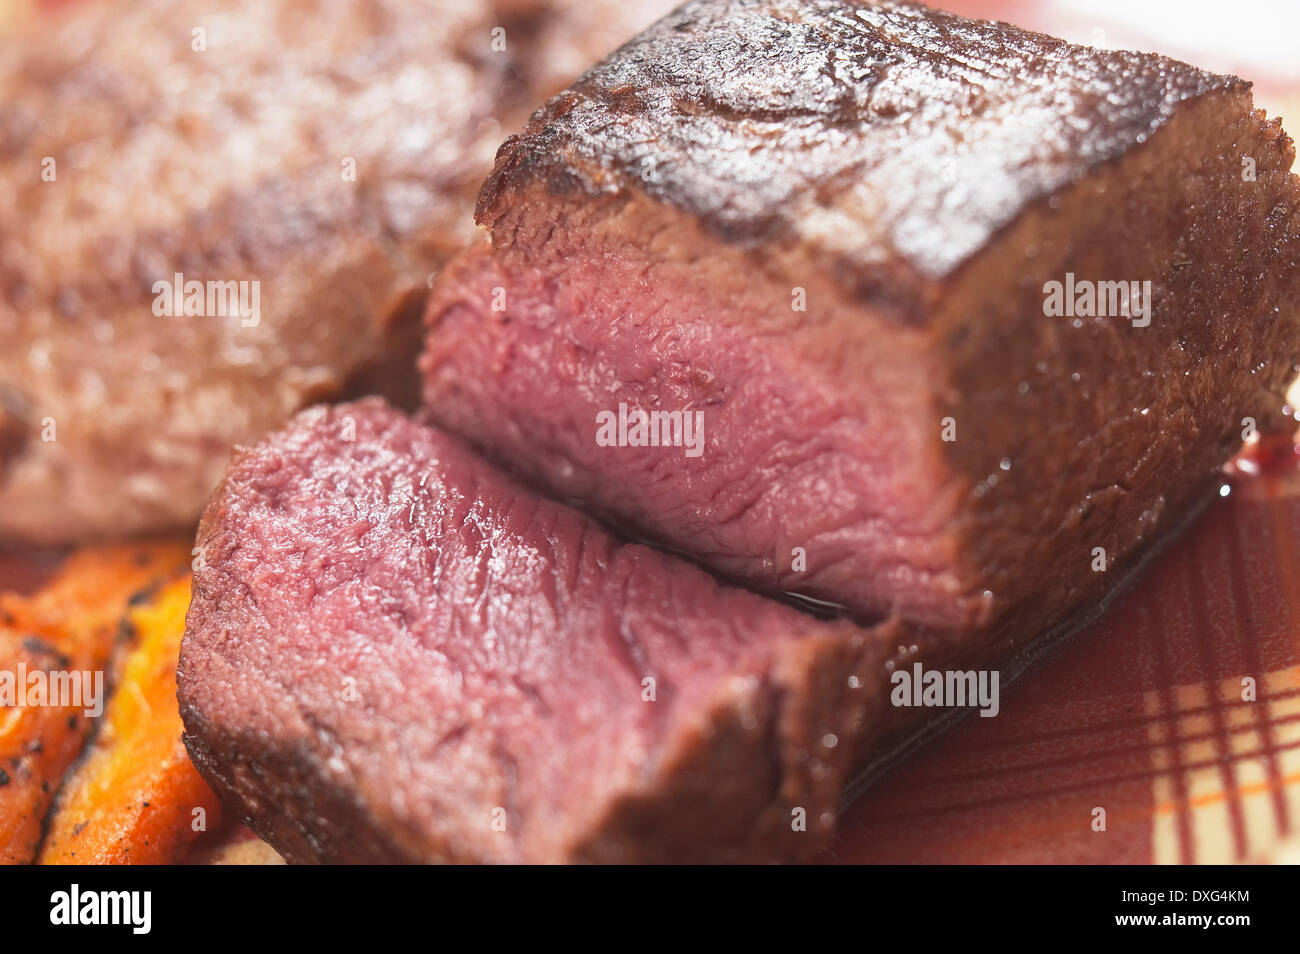 Piece Of Steak Cut To Show Colour Stock Photo